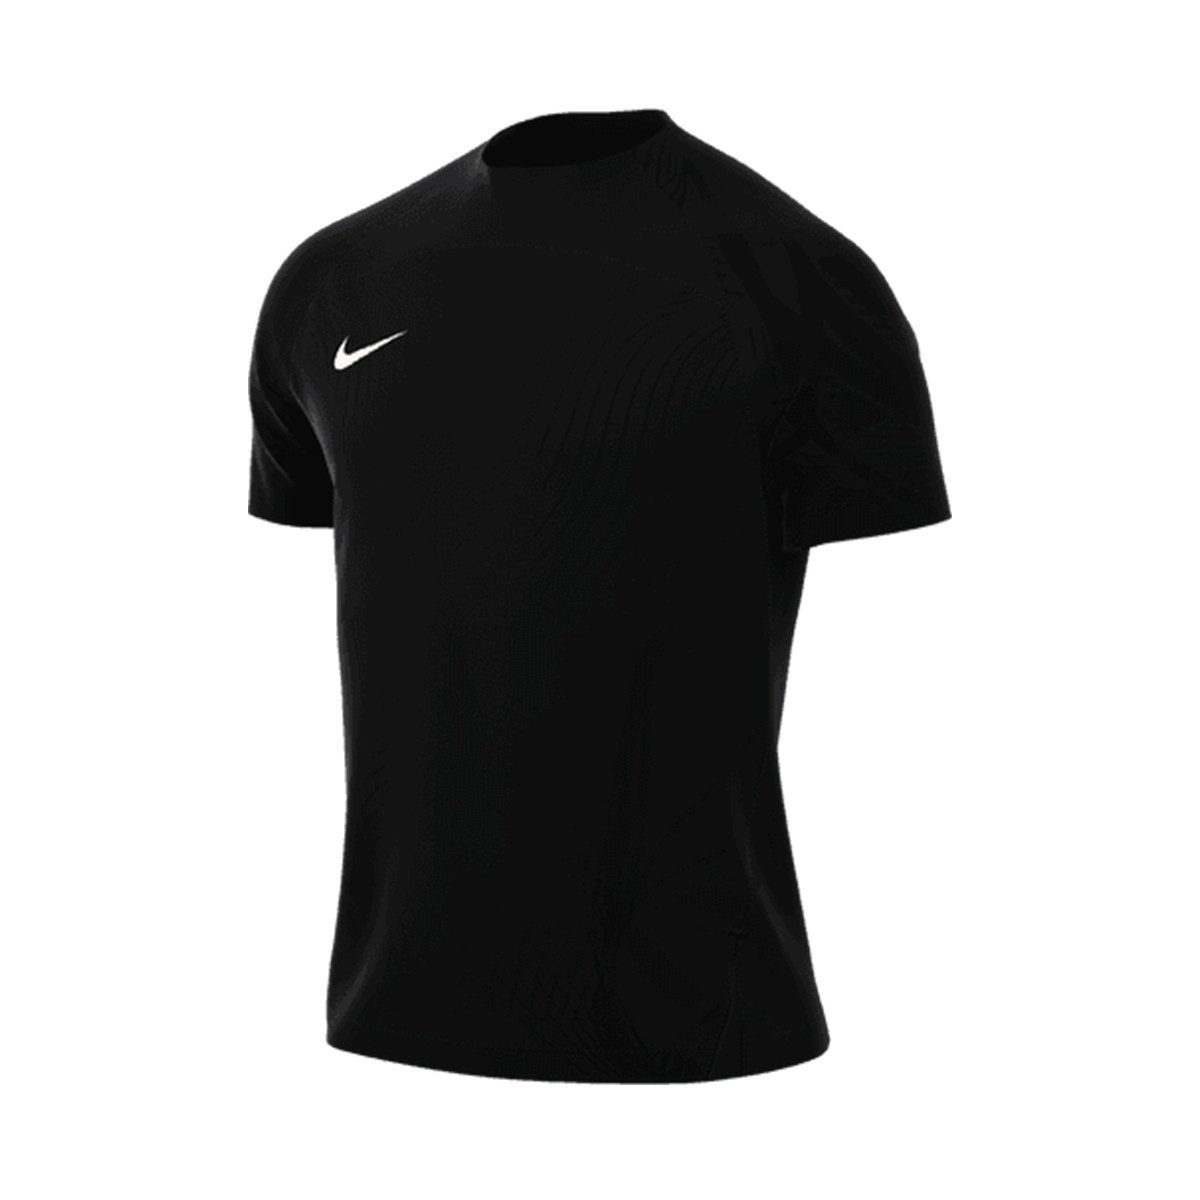 Camiseta Vaporknit m/c Black-White - Fútbol